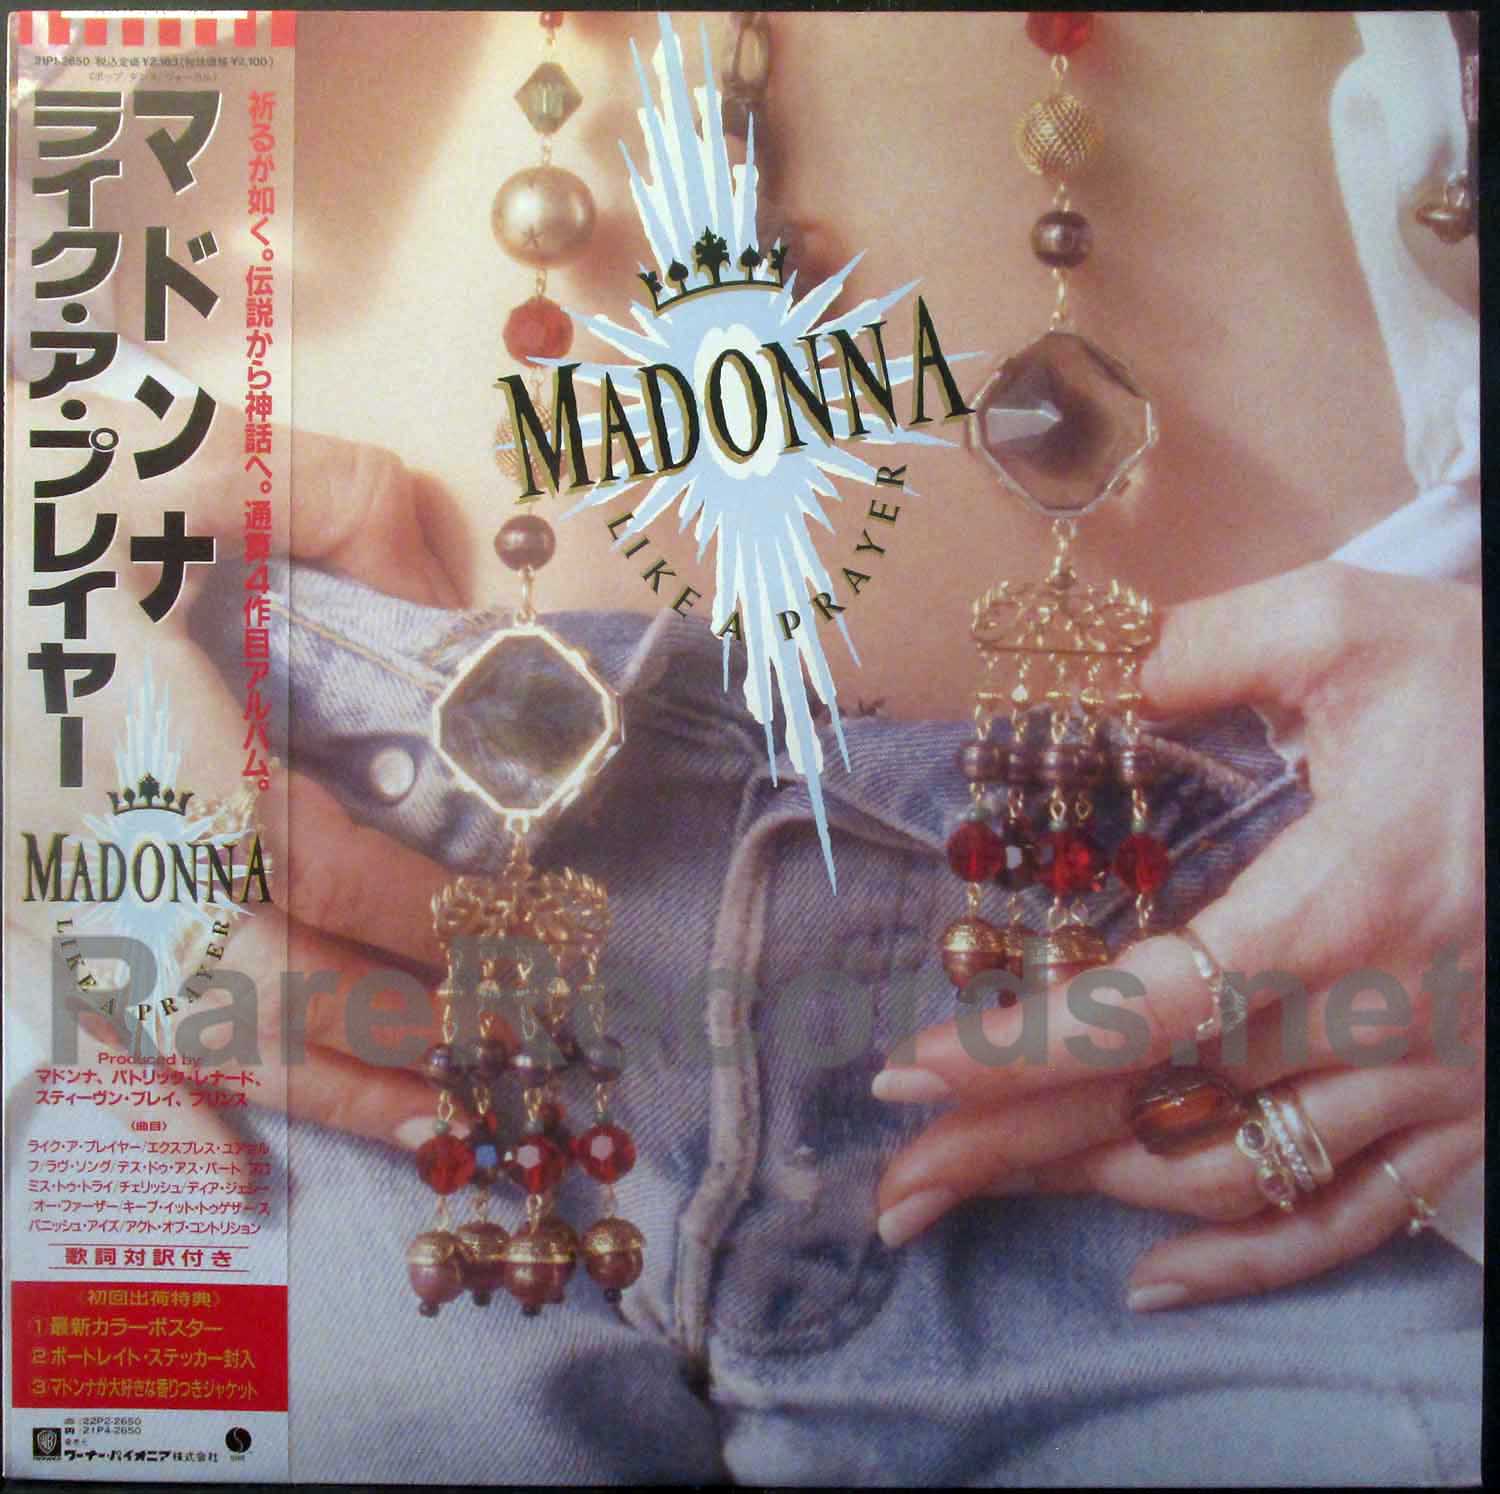 Madonna – Like a Prayer 1989 Japan LP with obi